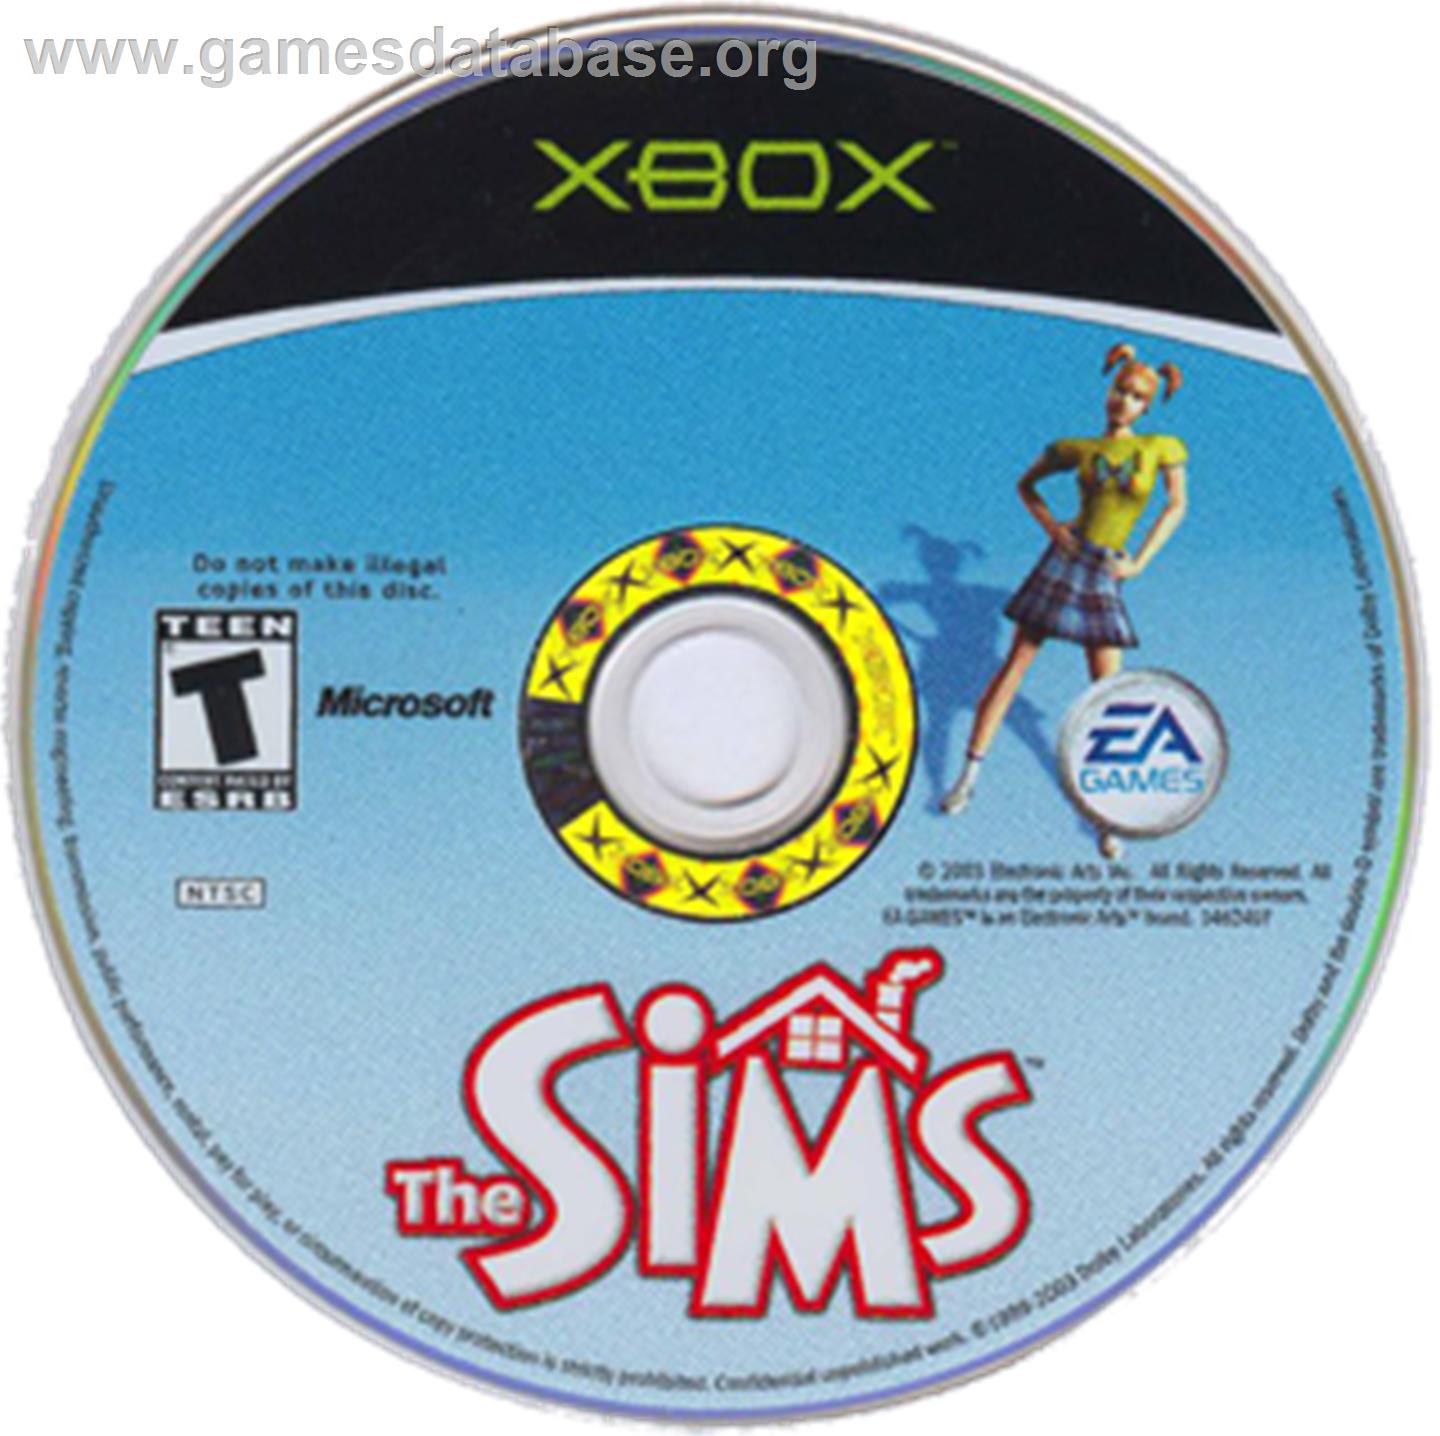 Sims - Microsoft Xbox - Artwork - CD